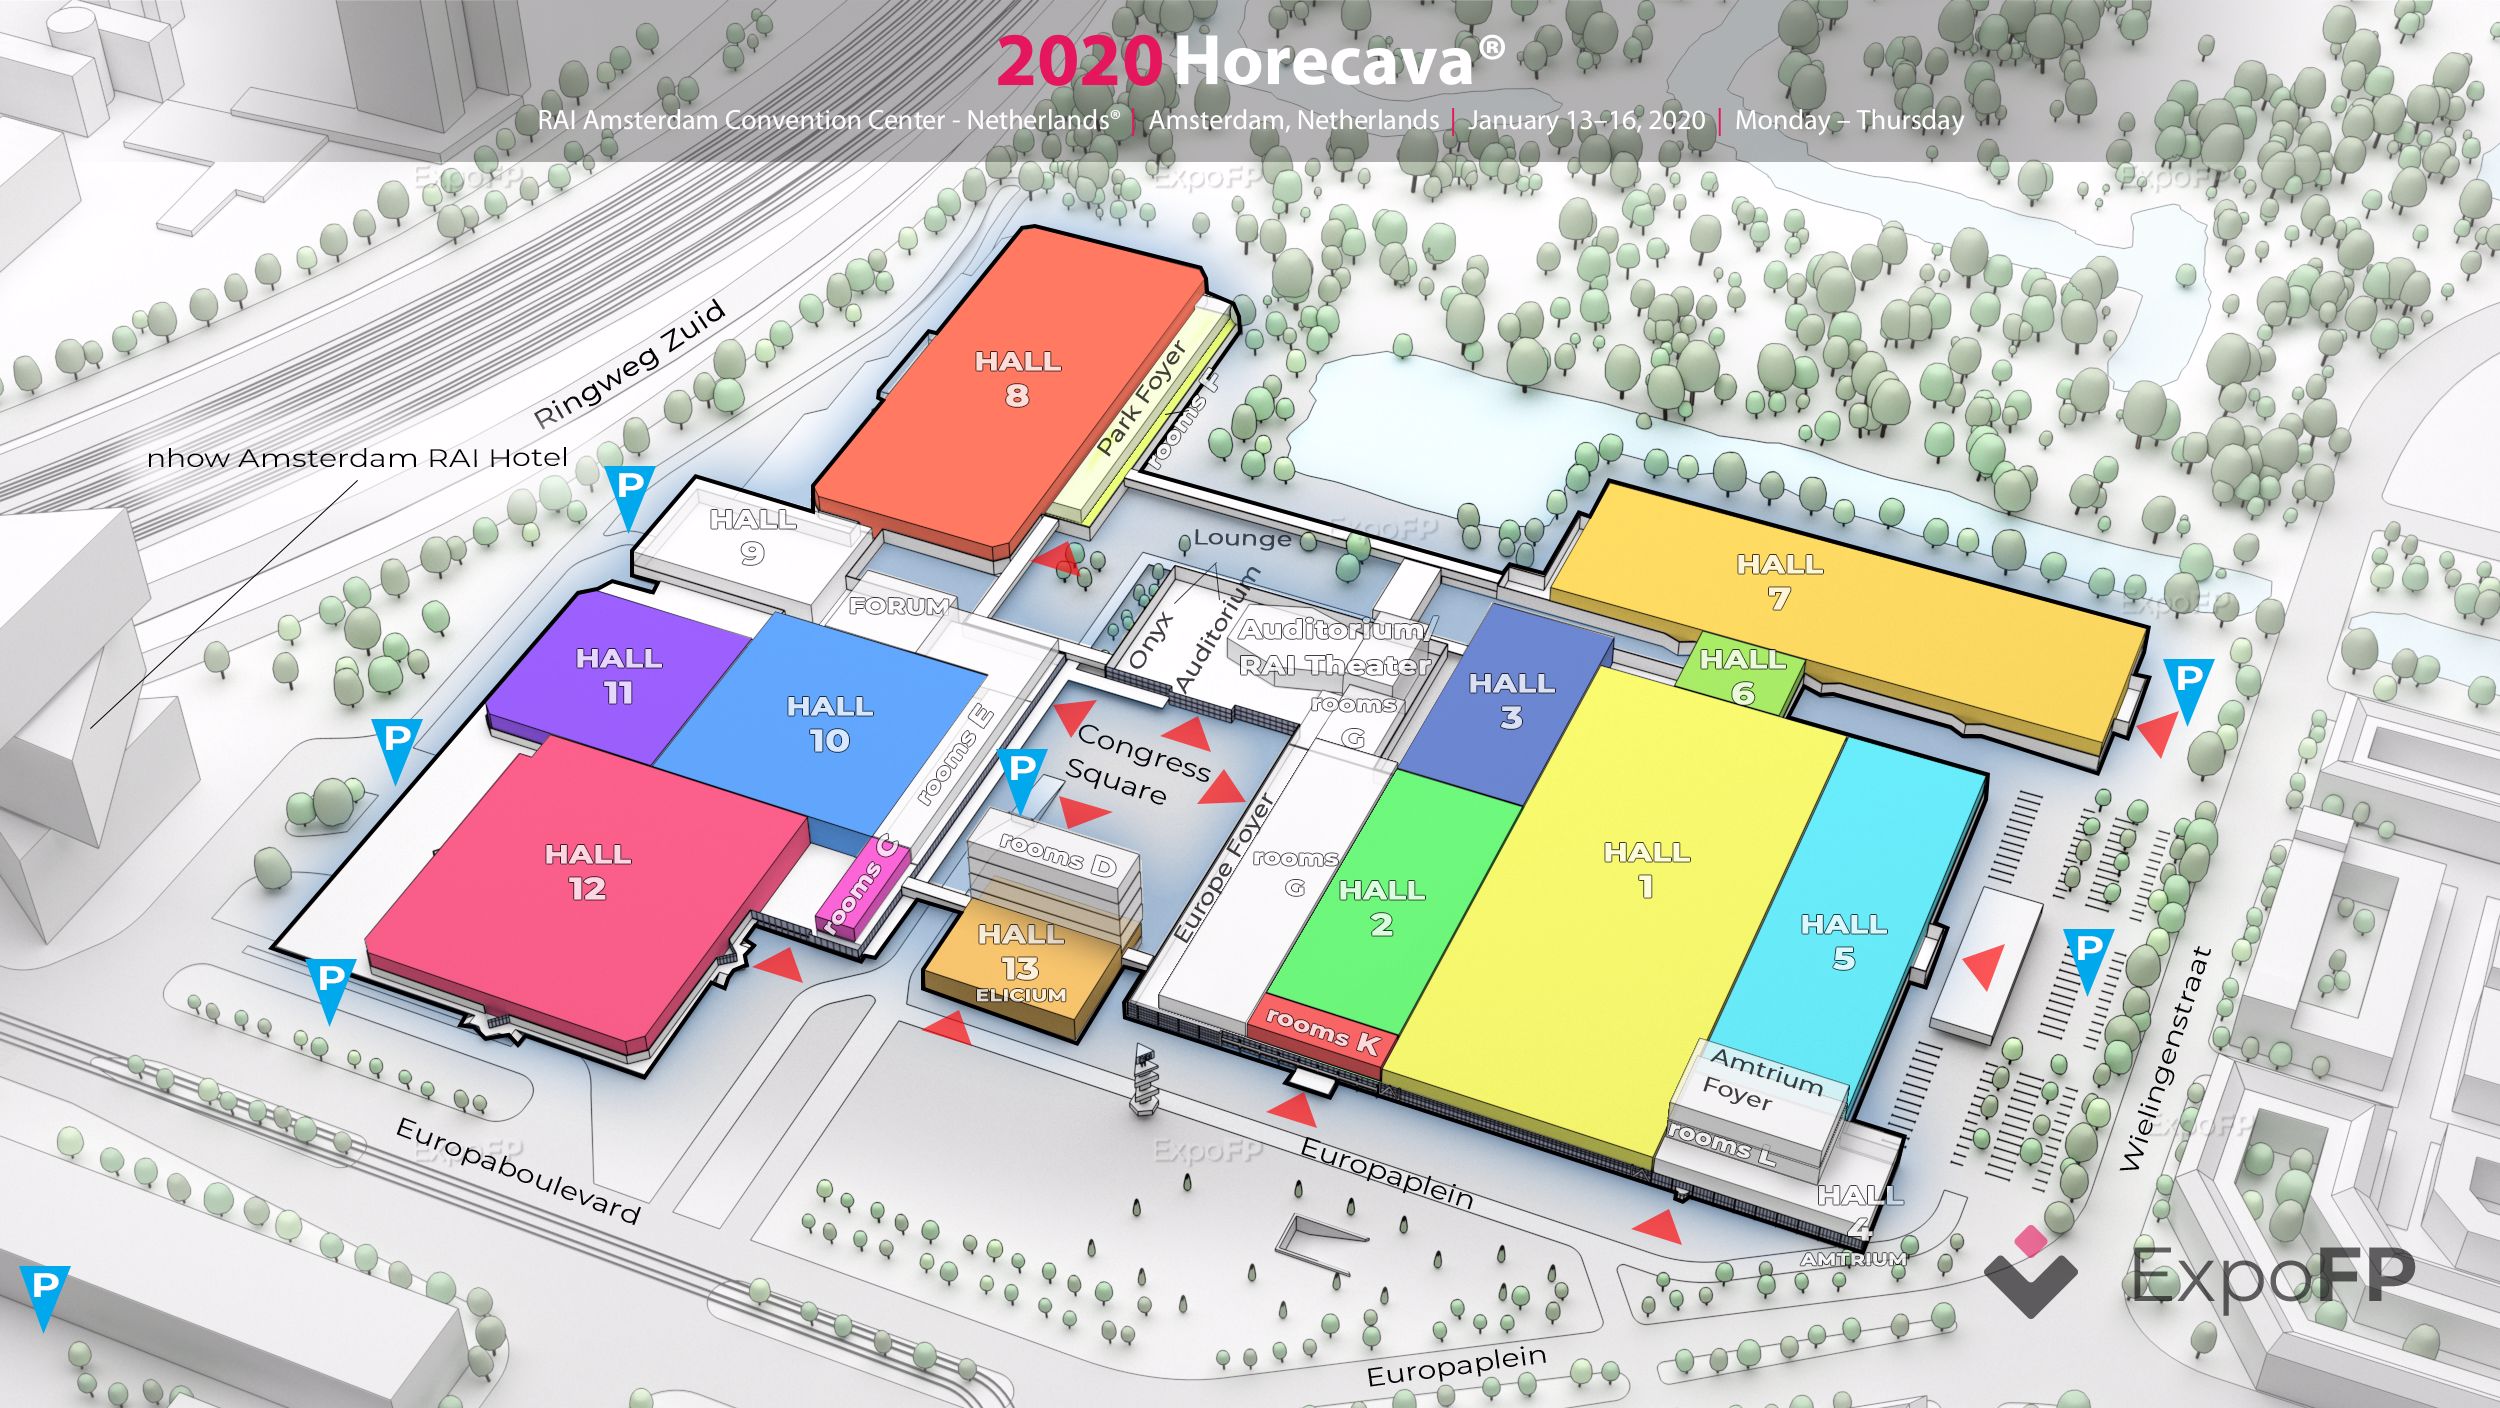 Horecava 2020 in RAI Amsterdam Convention Center Netherlands